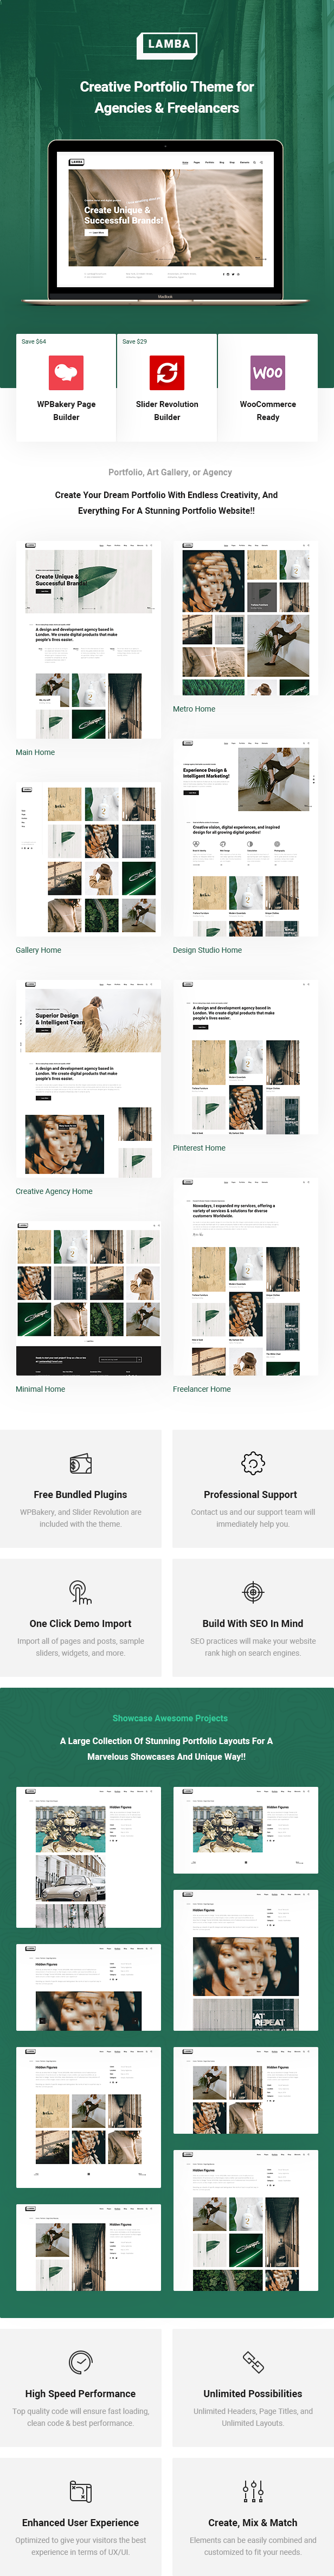 Lamba - Creative Portfolio & Agency WordPress Theme - 4